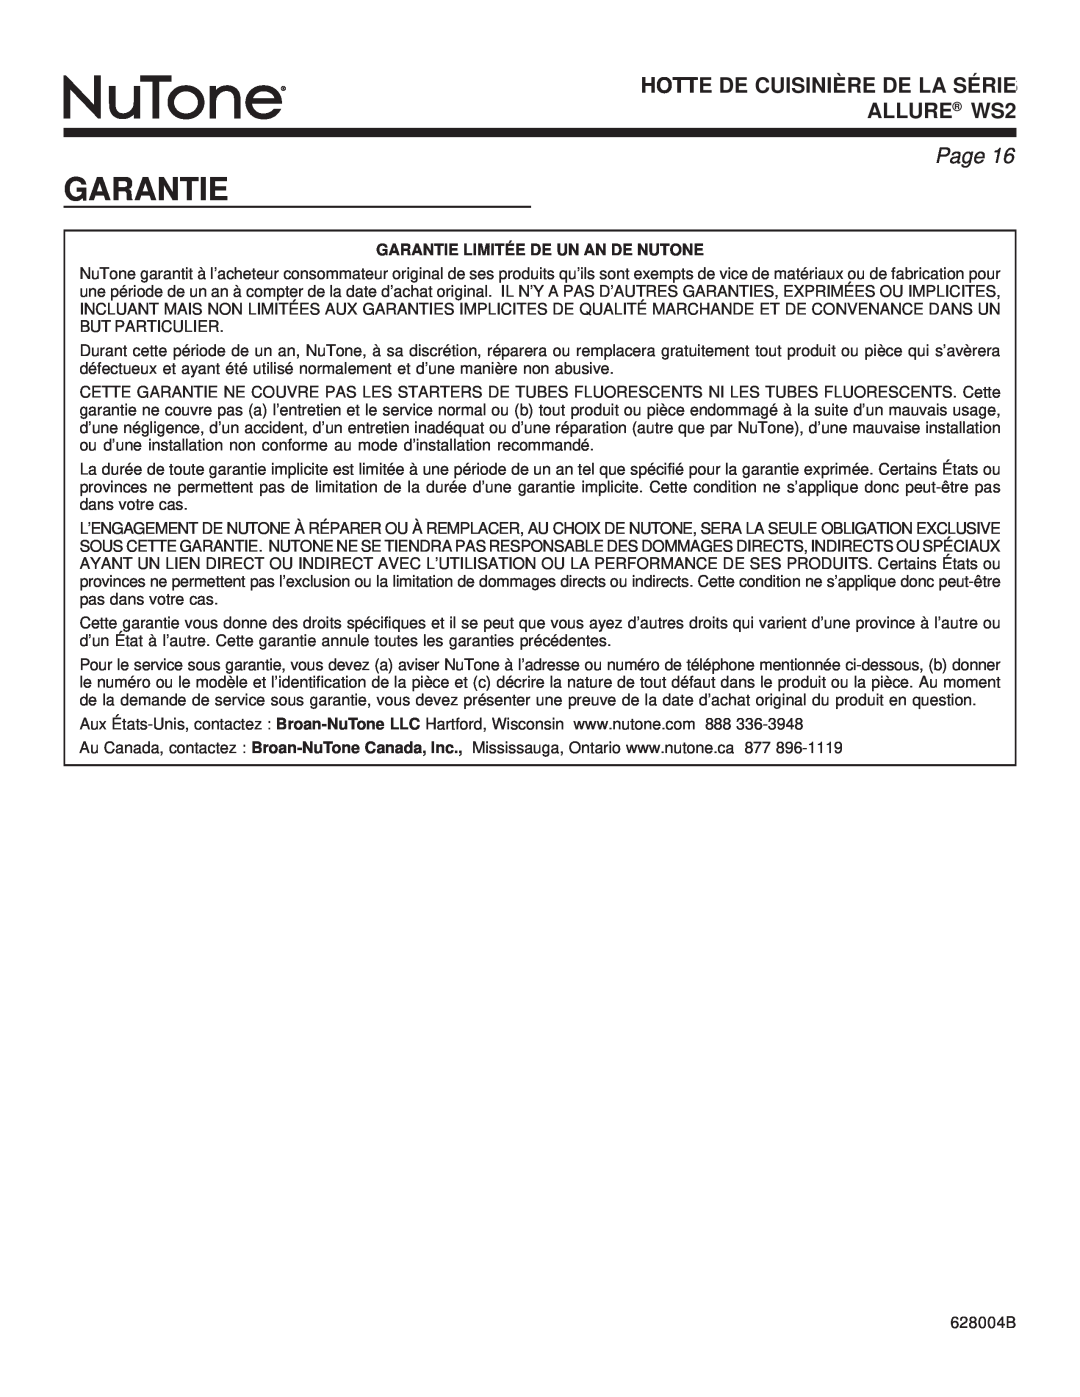 NuTone warranty HOTTE DE CUISINIÈRE DE LA SÉRIE ALLURE WS2, Page, Garantie Limitée De Un An De Nutone 